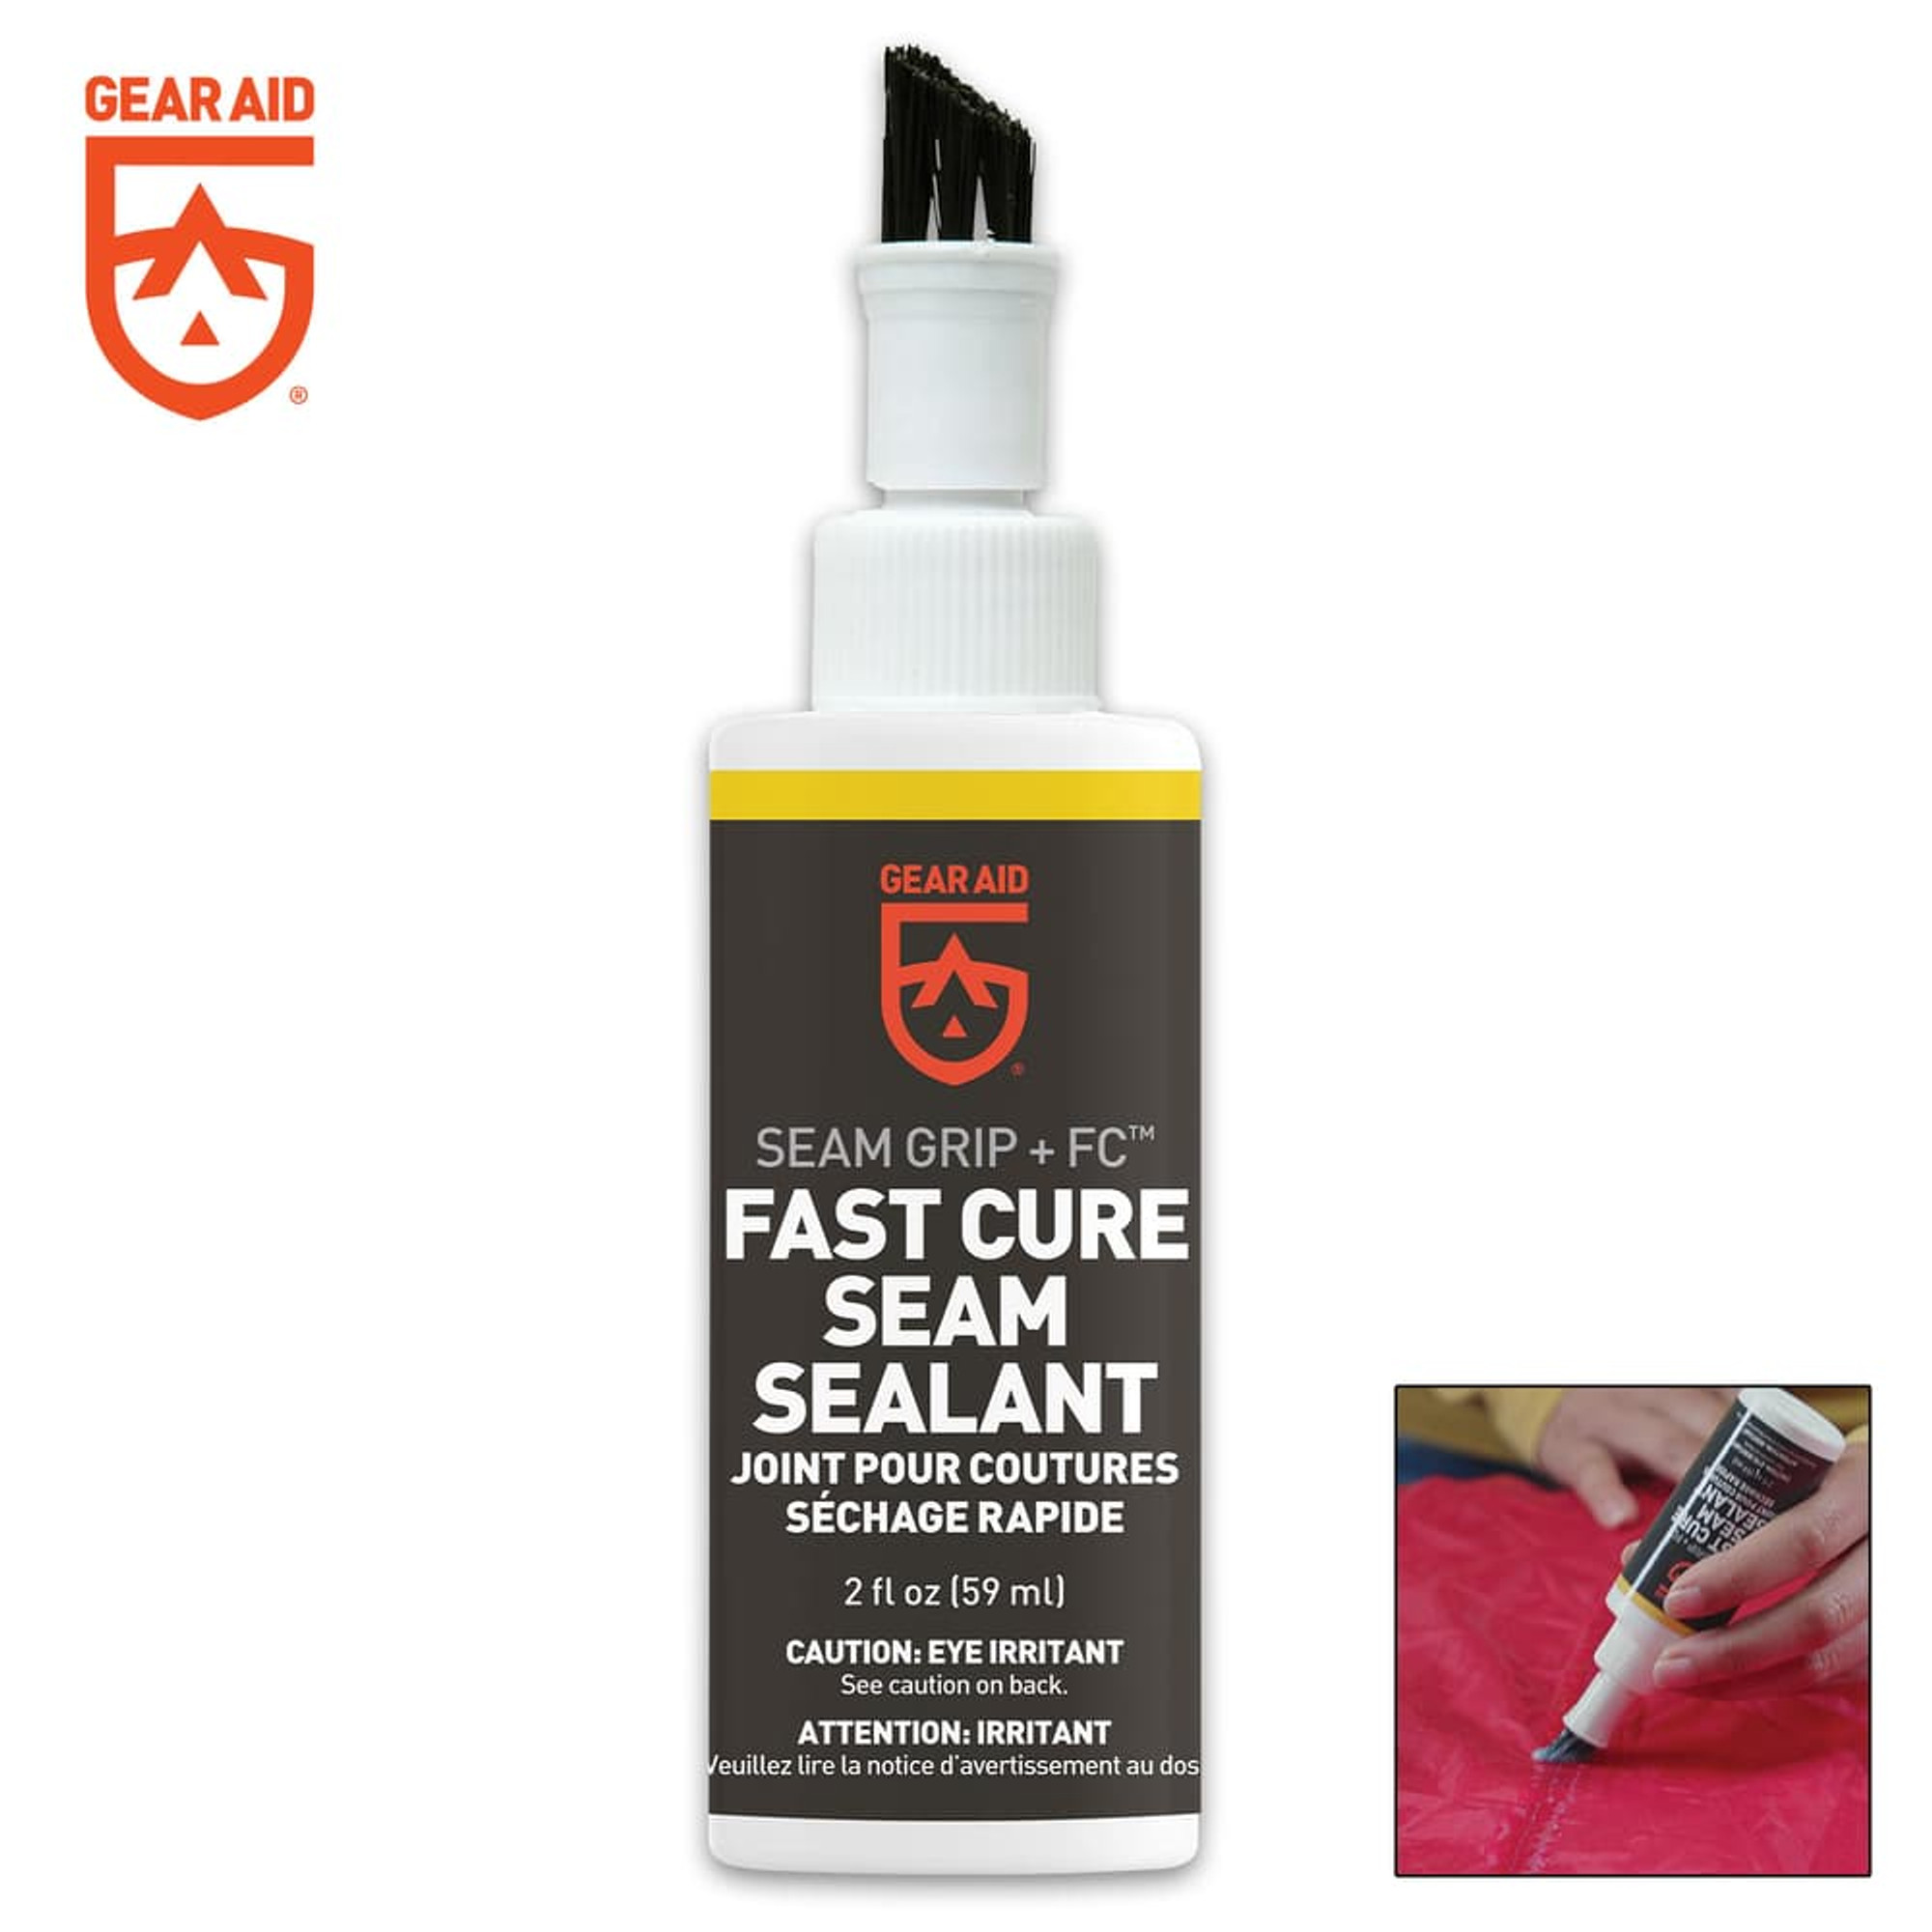 Seam Grip FC Fast Cure Seam Sealant